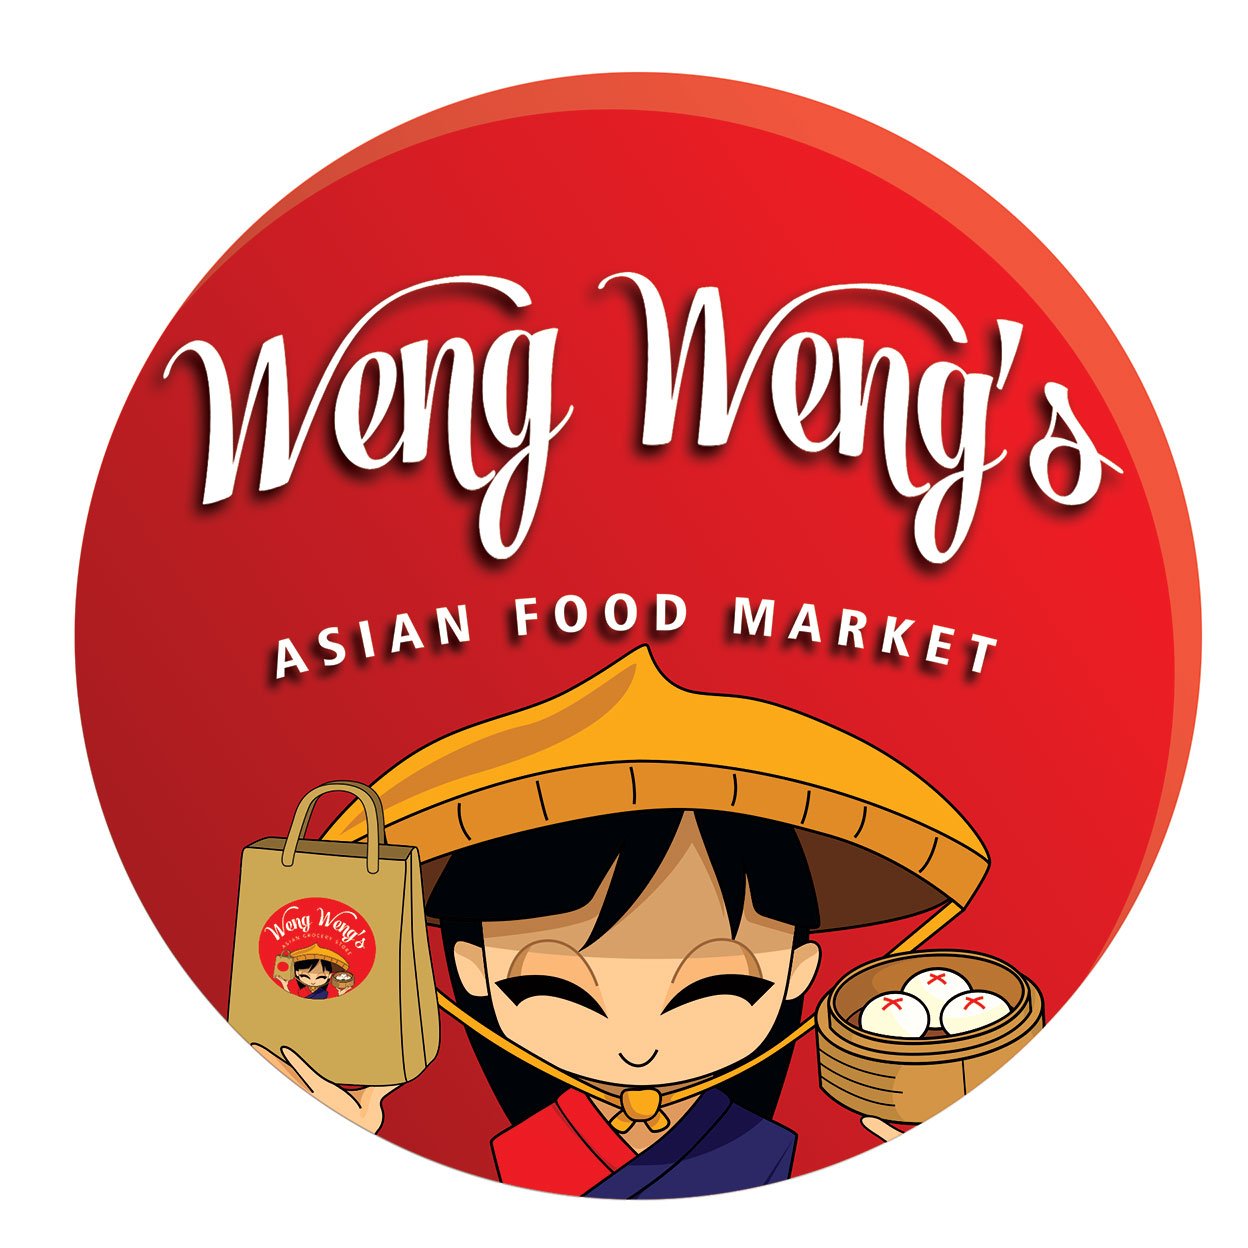 Weng Weng's Asian Food Market